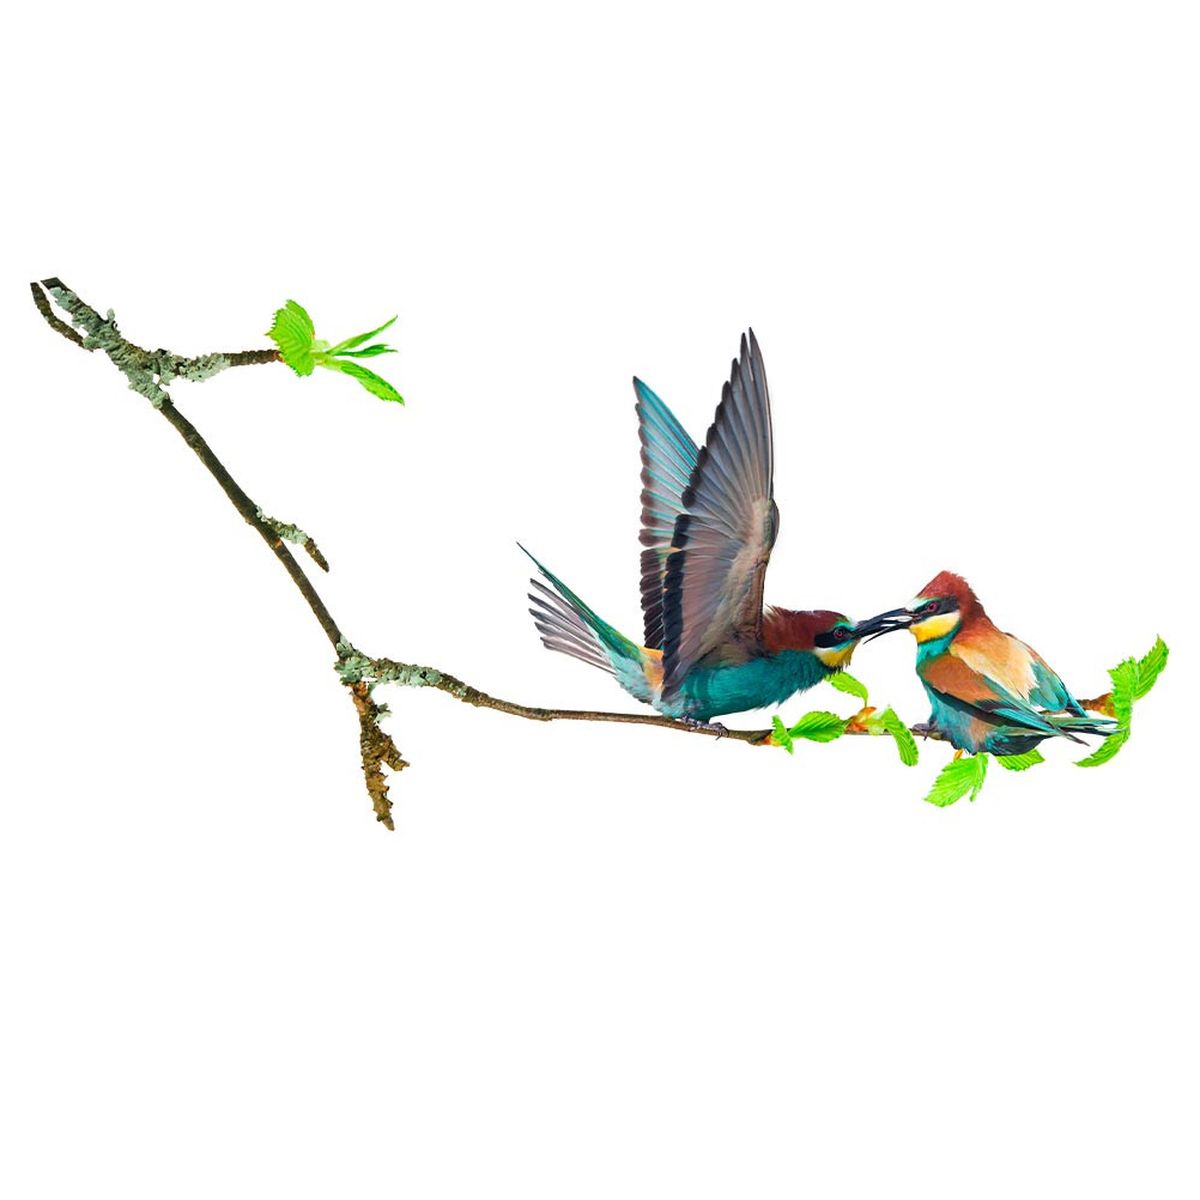 Sticker Mural dcoratif - Branche et Oiseaux